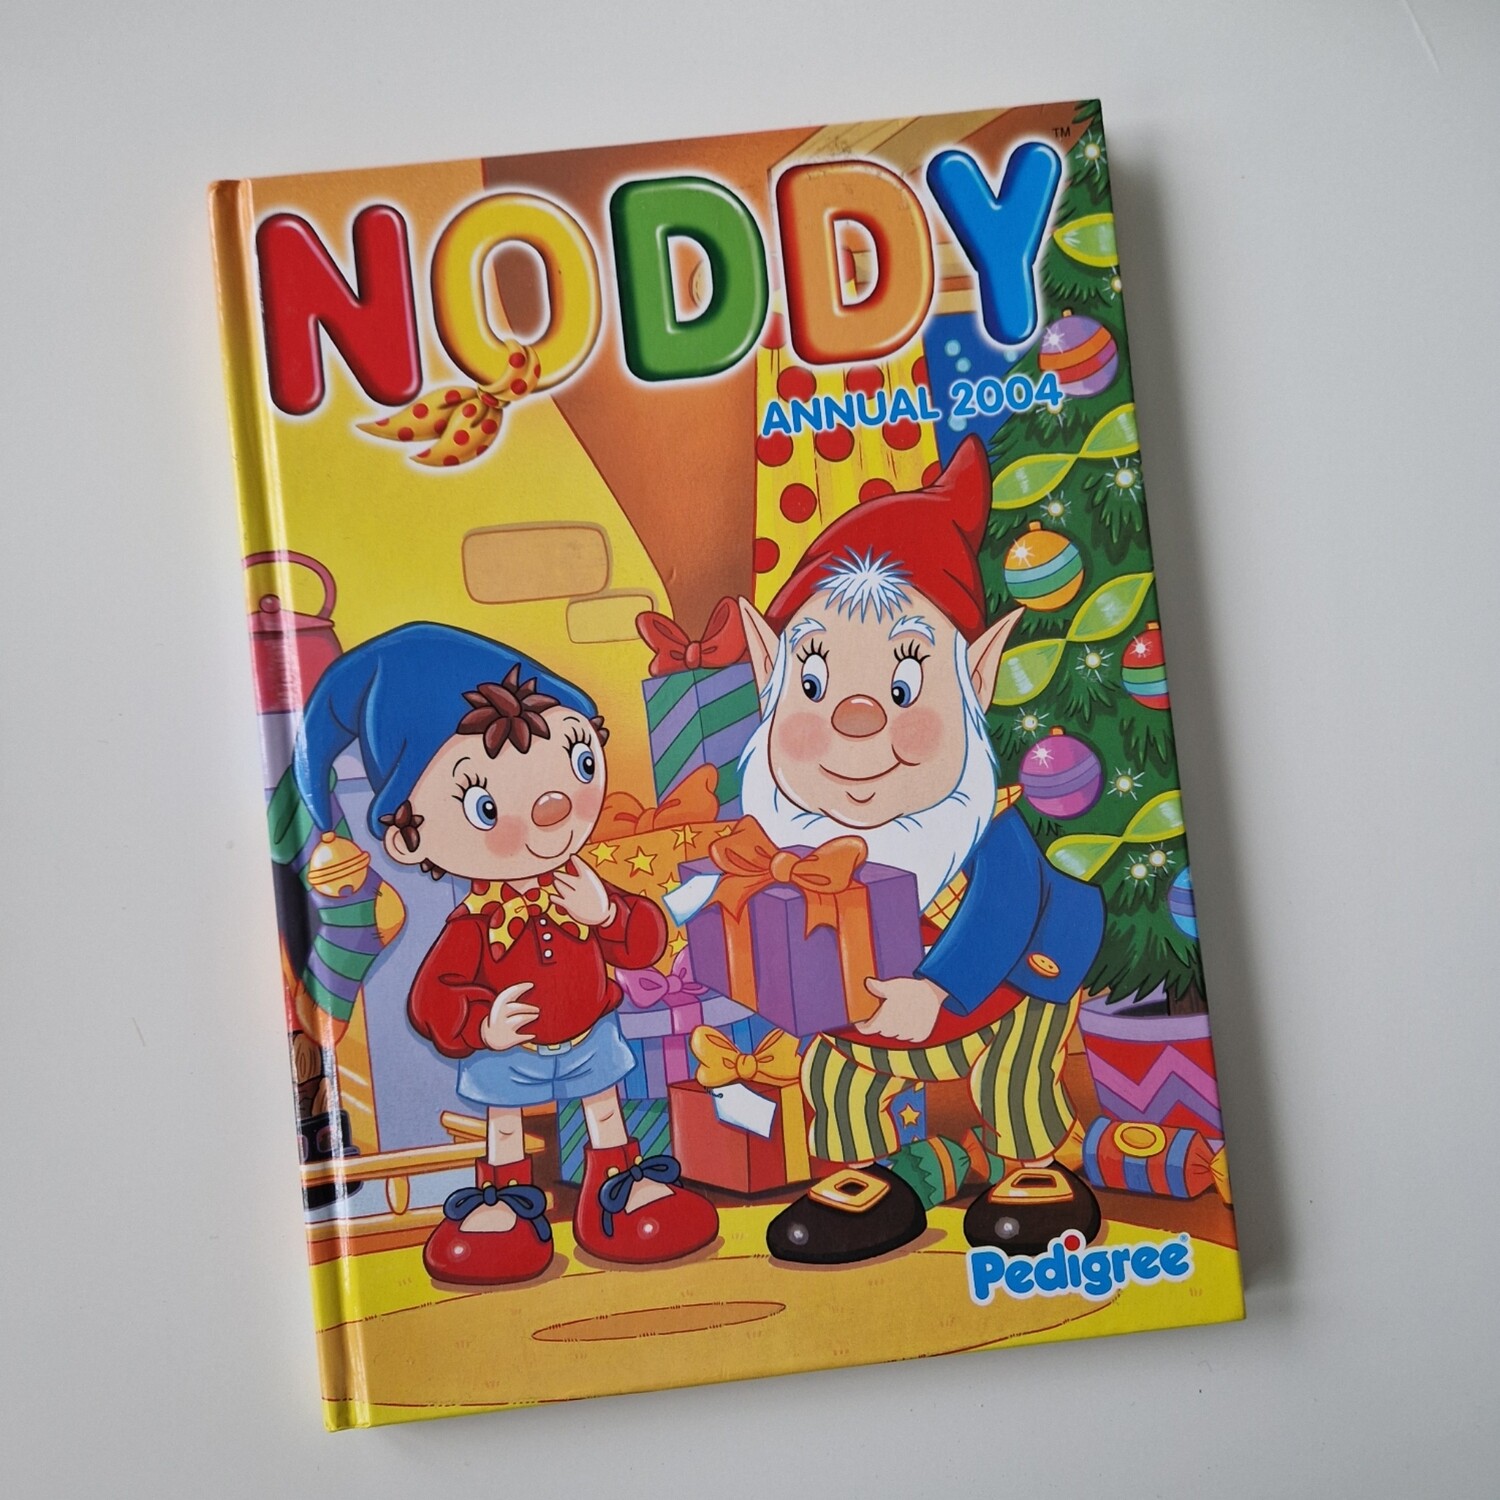 Noddy 2004